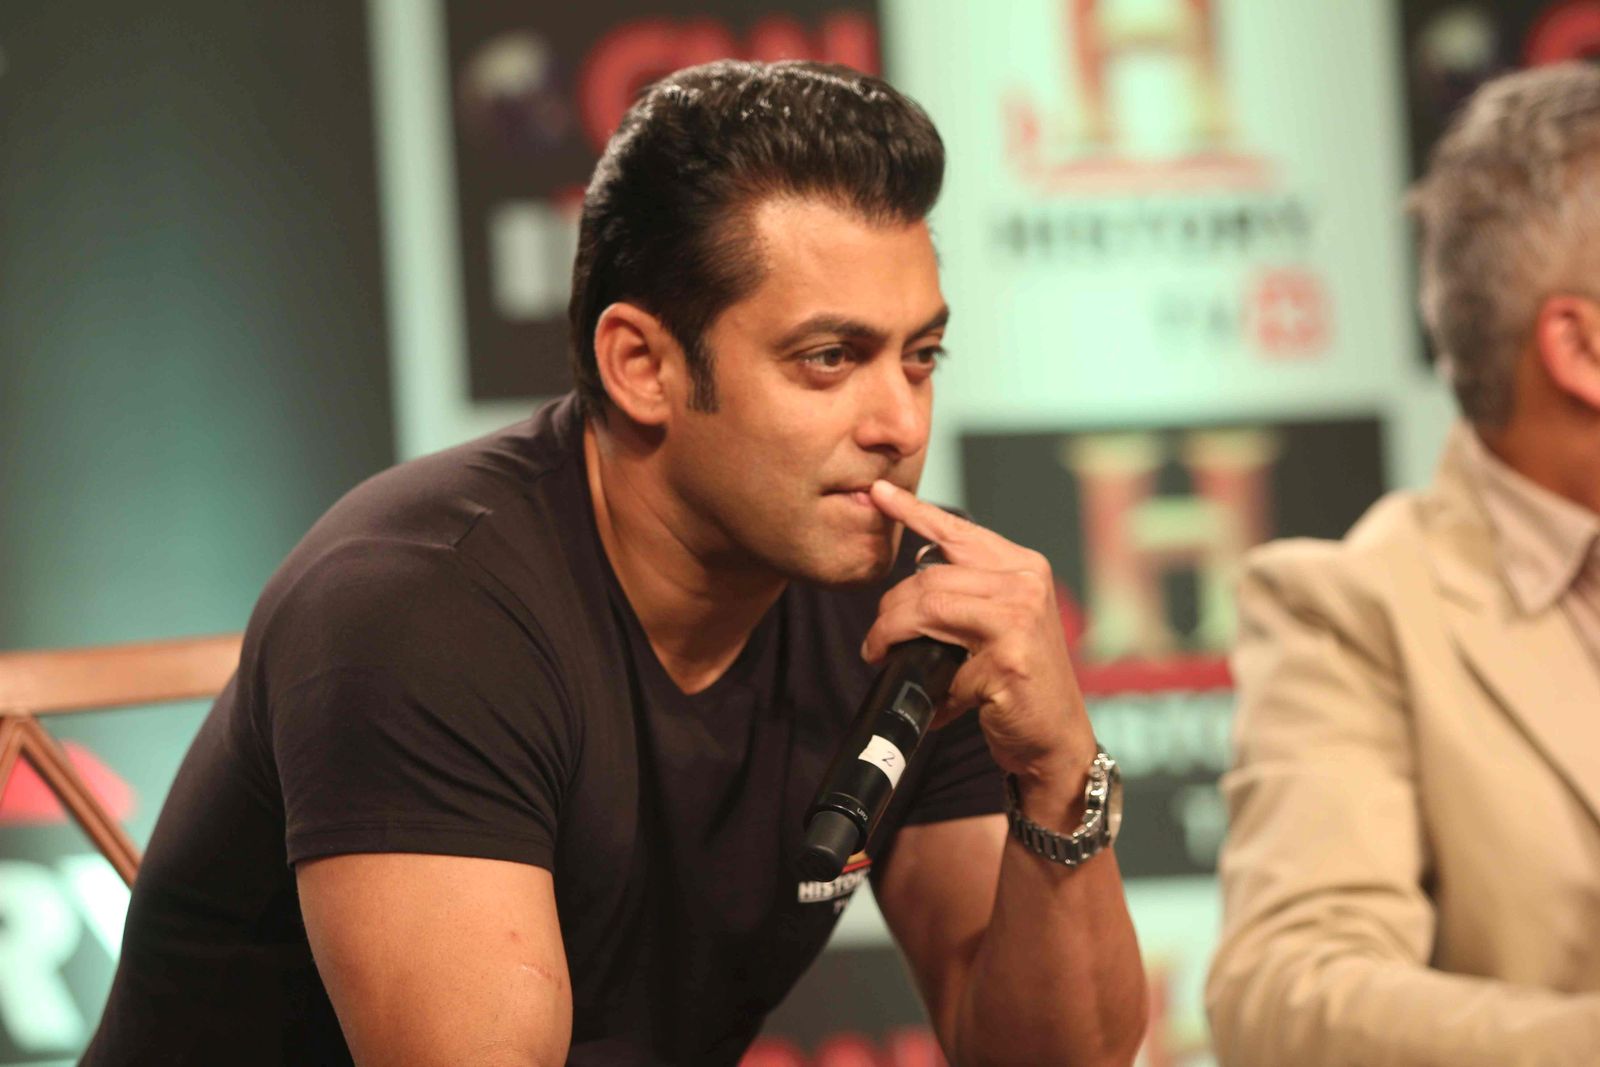 Everyone is scared of losing stardom: Salman Khan